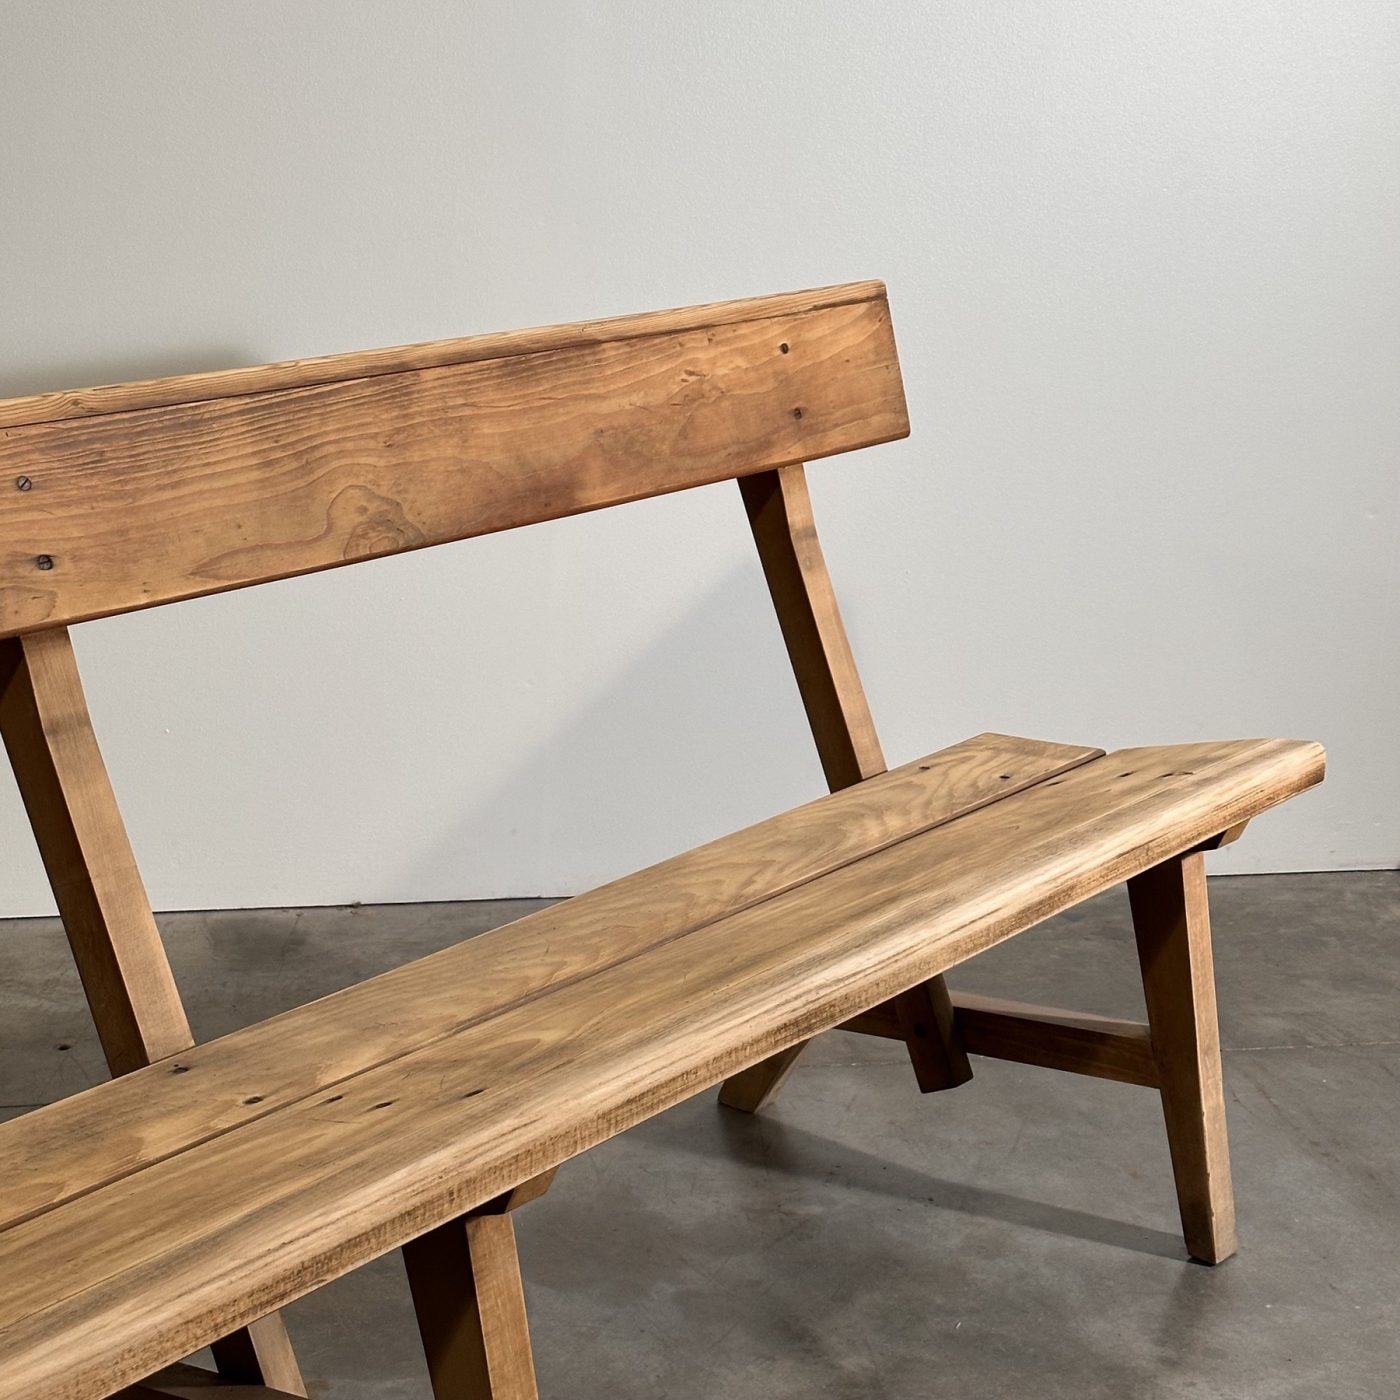 objet-vagabond-wooden-benches0002